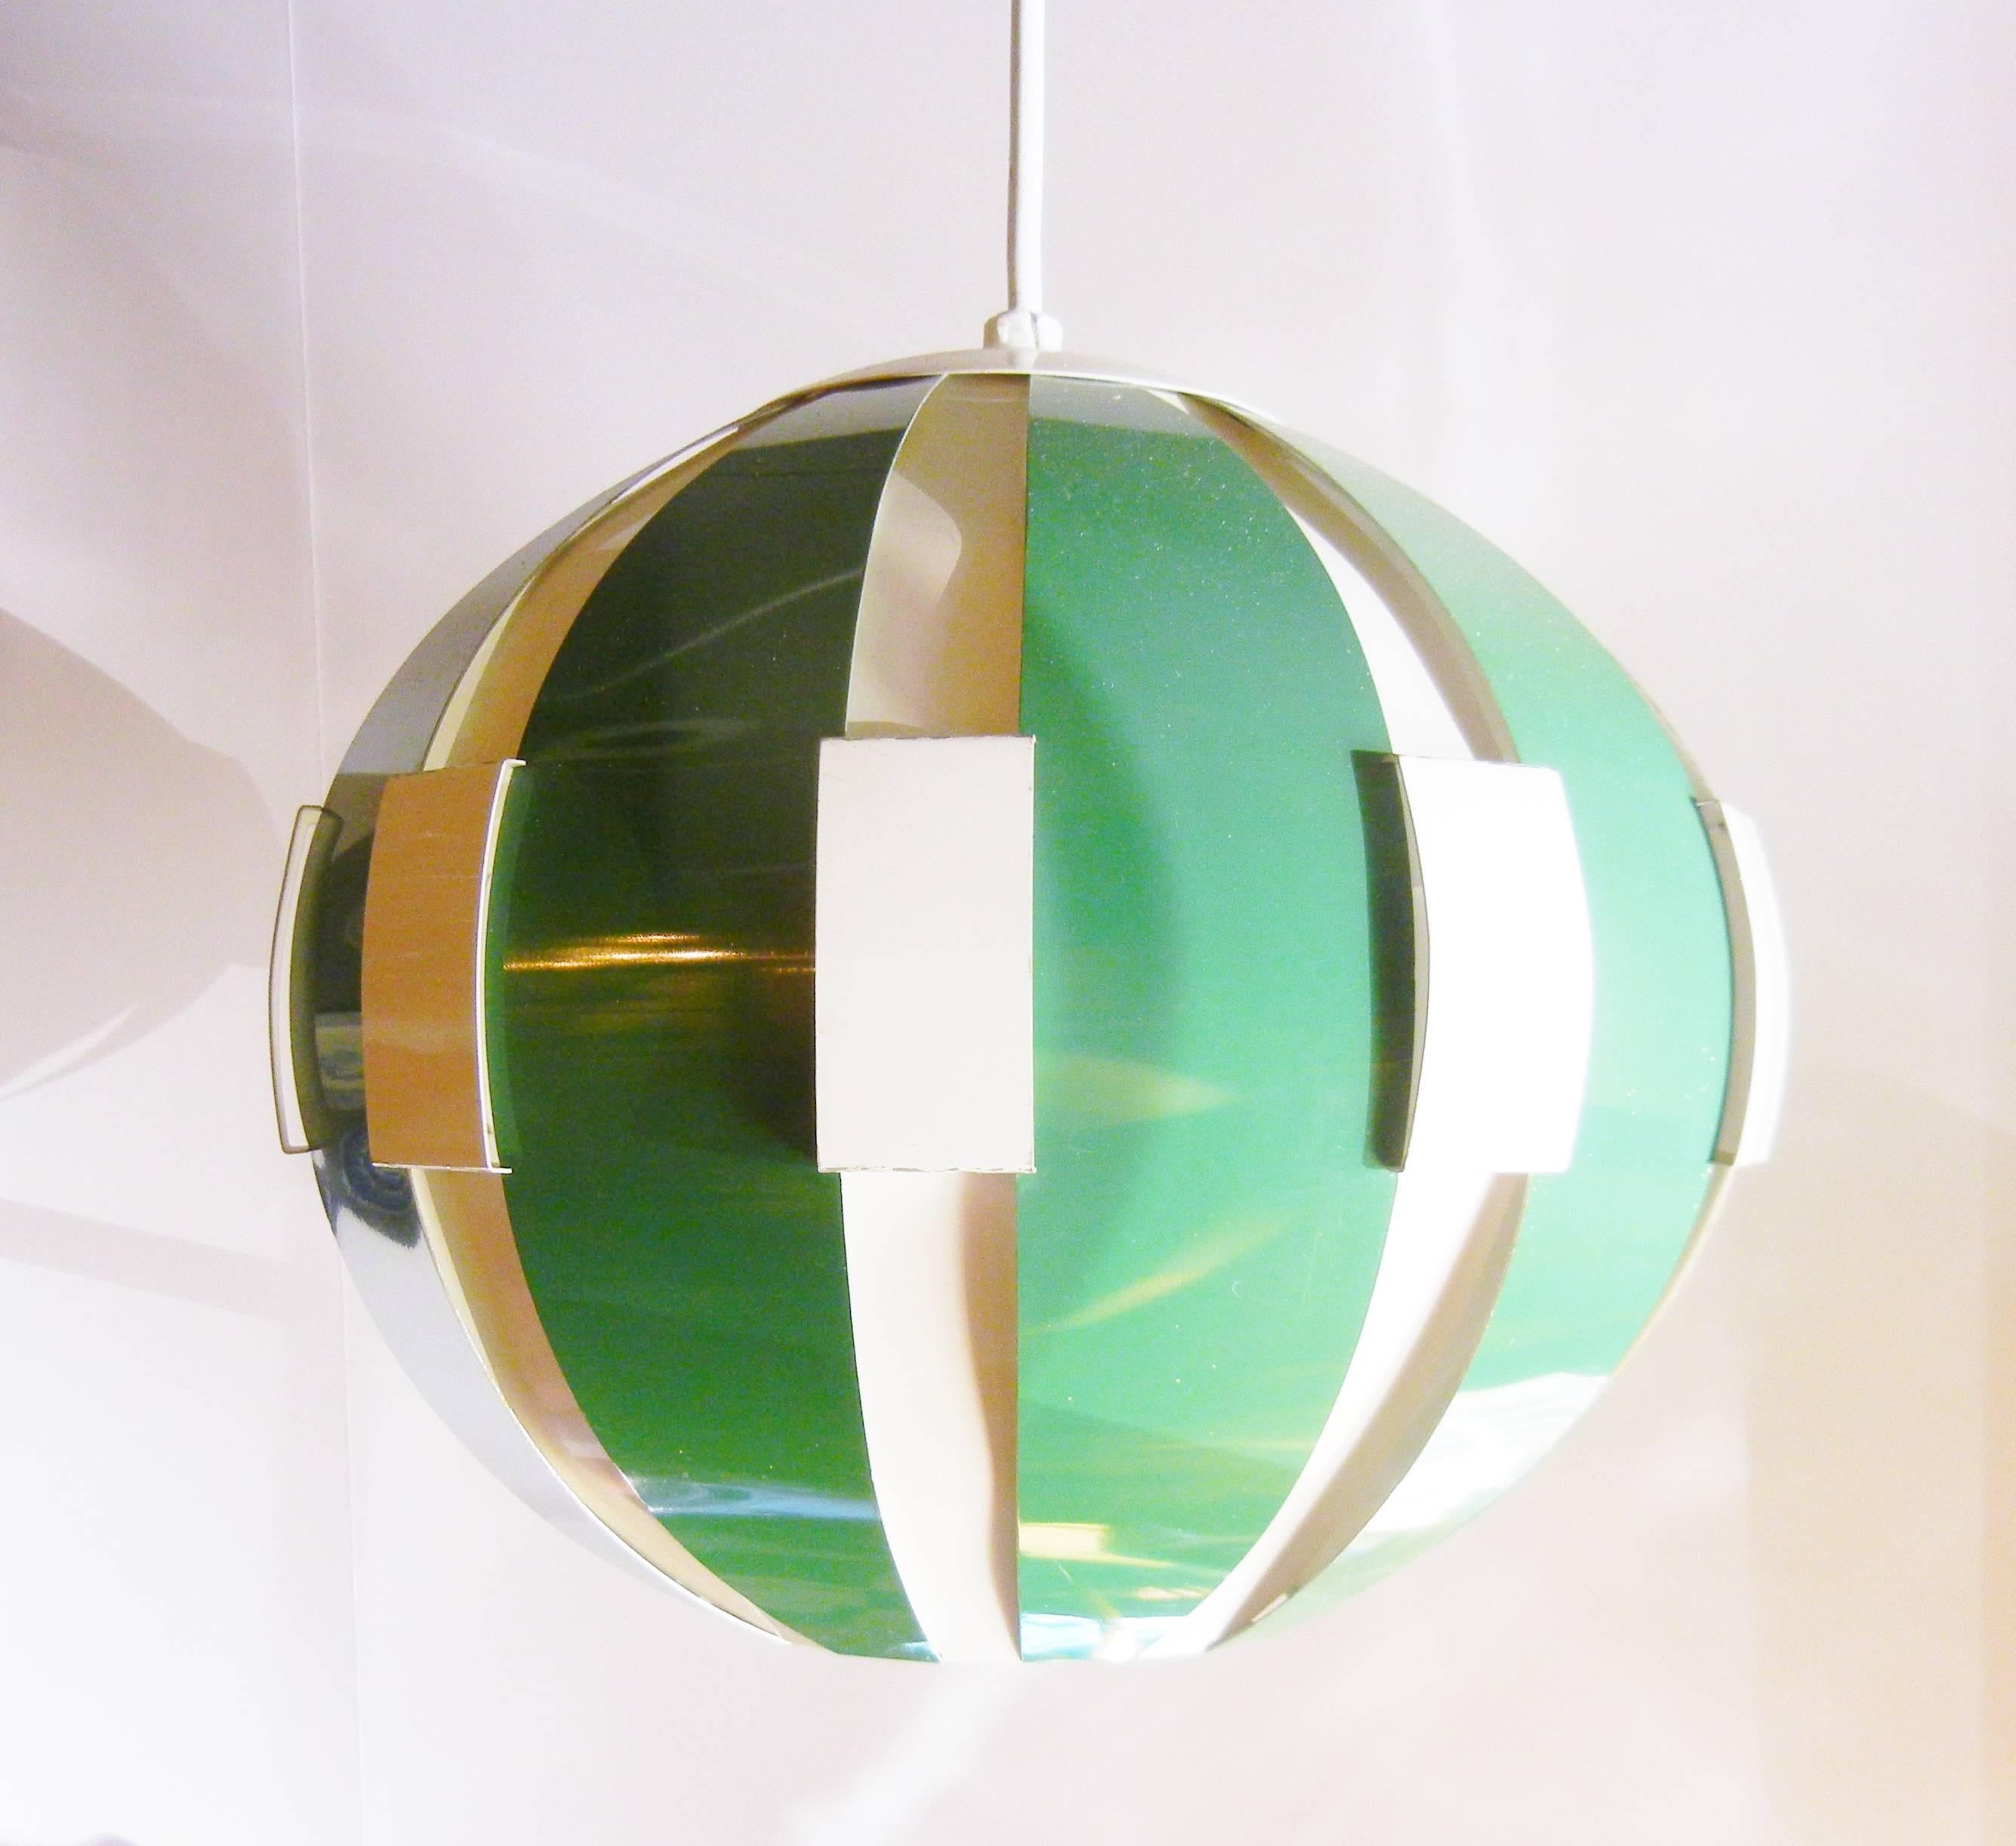 Telstar, 1st US Satellite, Pendant Lamp in Green and Ivory Aluminum, 1962 2